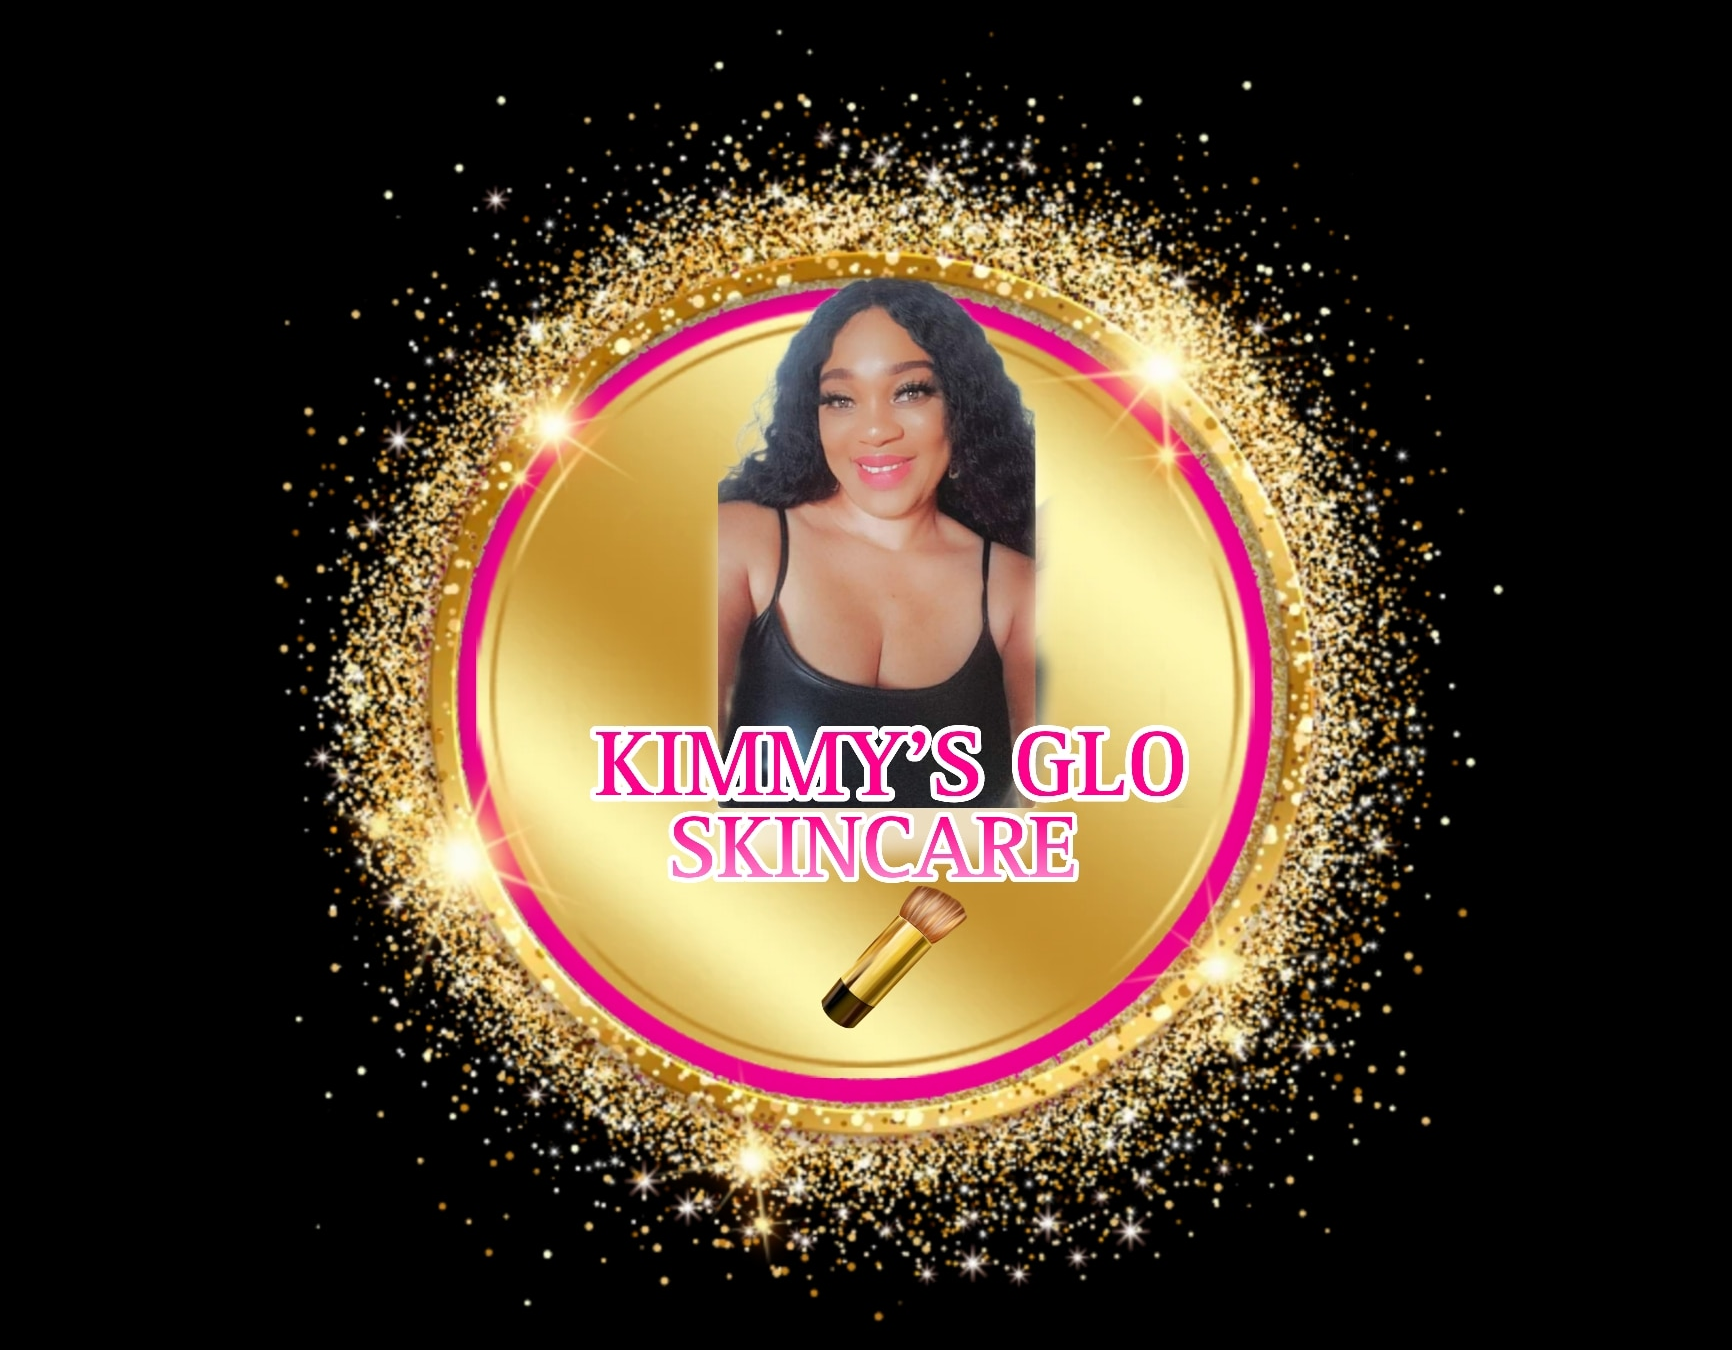 Kimmy's glo skincare 